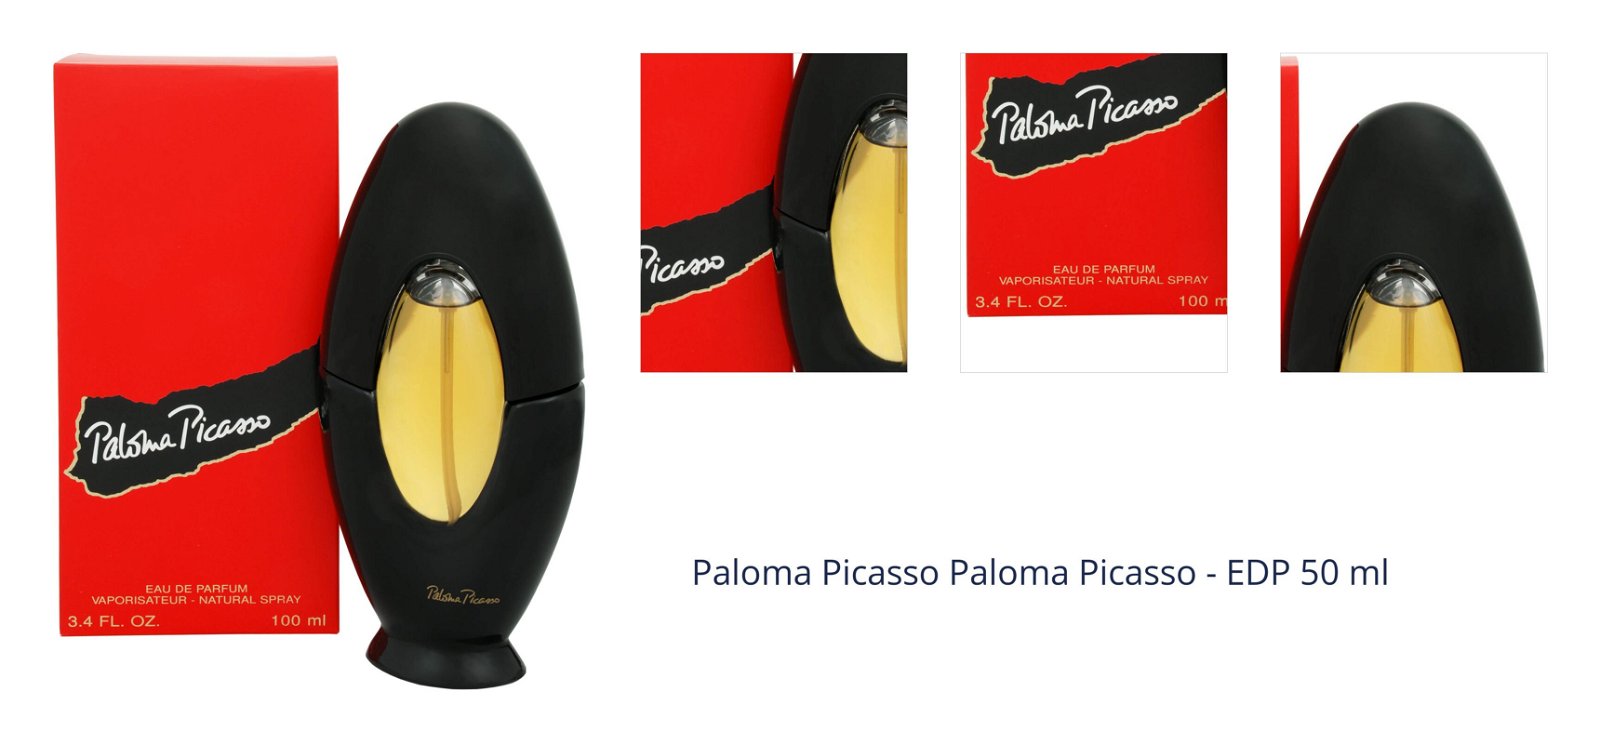 Paloma Picasso Paloma Picasso - EDP 50 ml 1